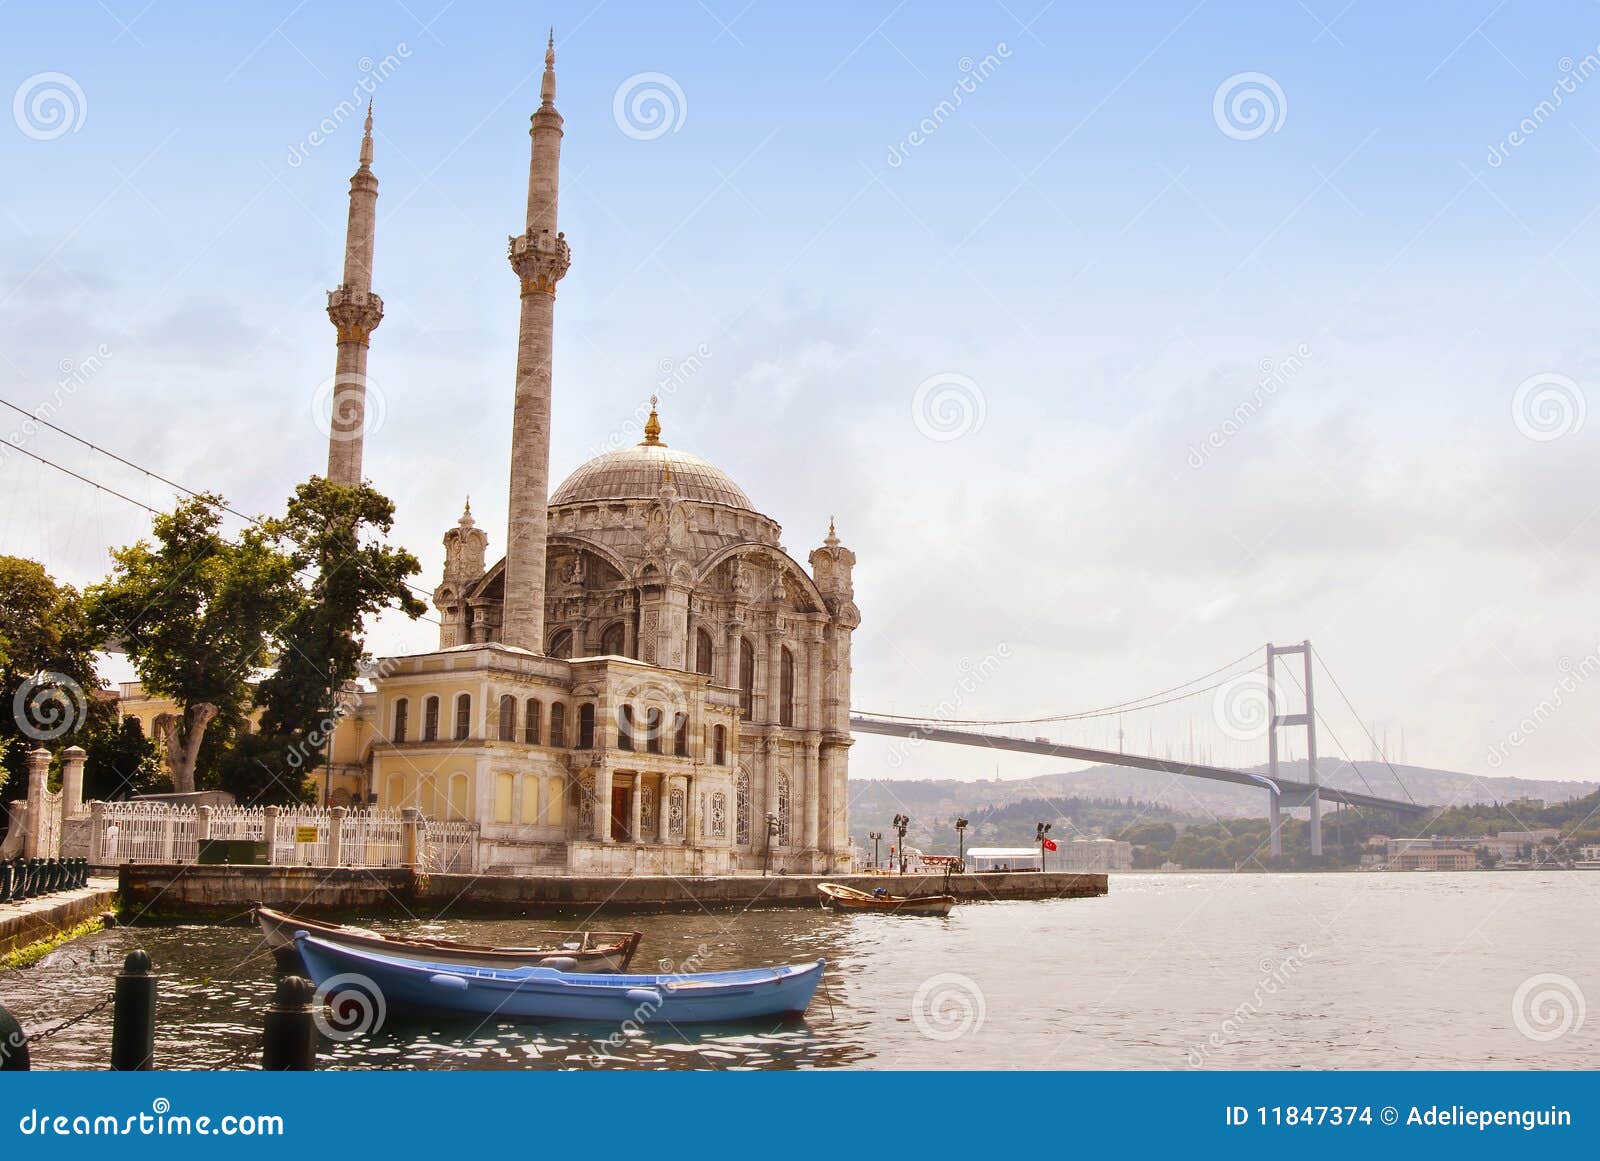 mosque, istanbul on the bosporus, turkey